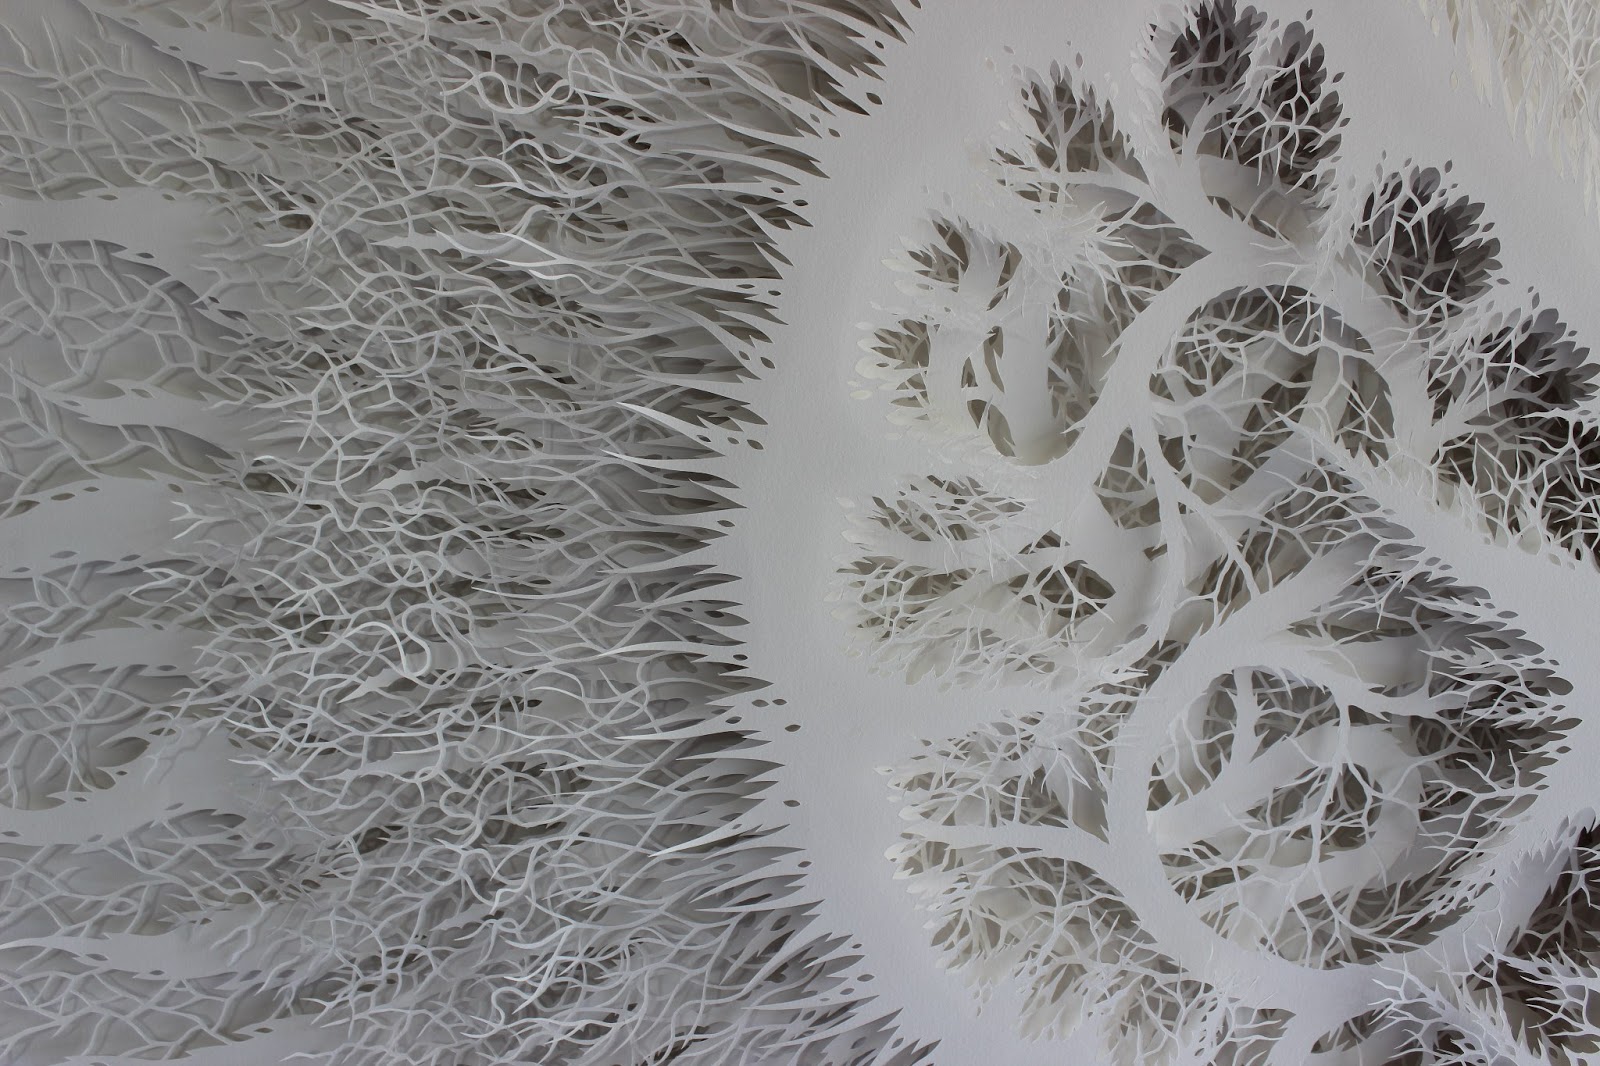 Rogan Brownart – “Kernel” Hand cut layered paper sculpture